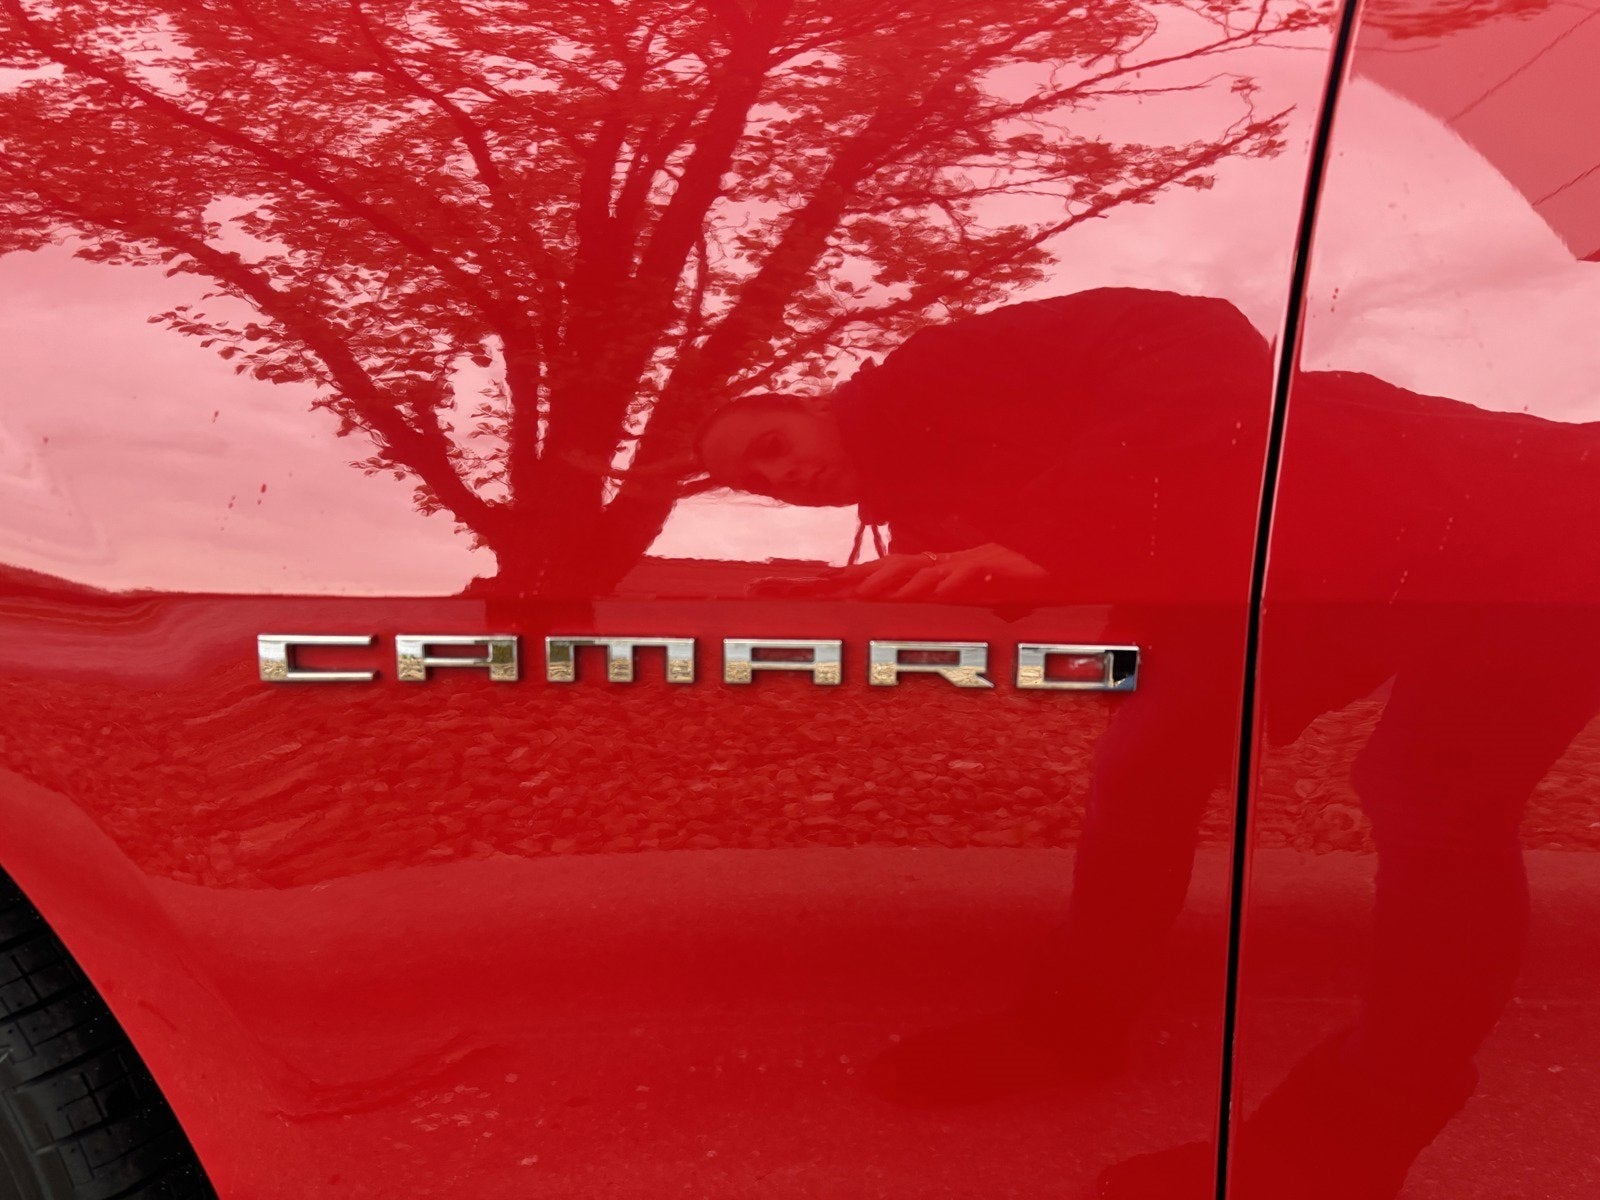 2010 Chevrolet Camaro 2SS